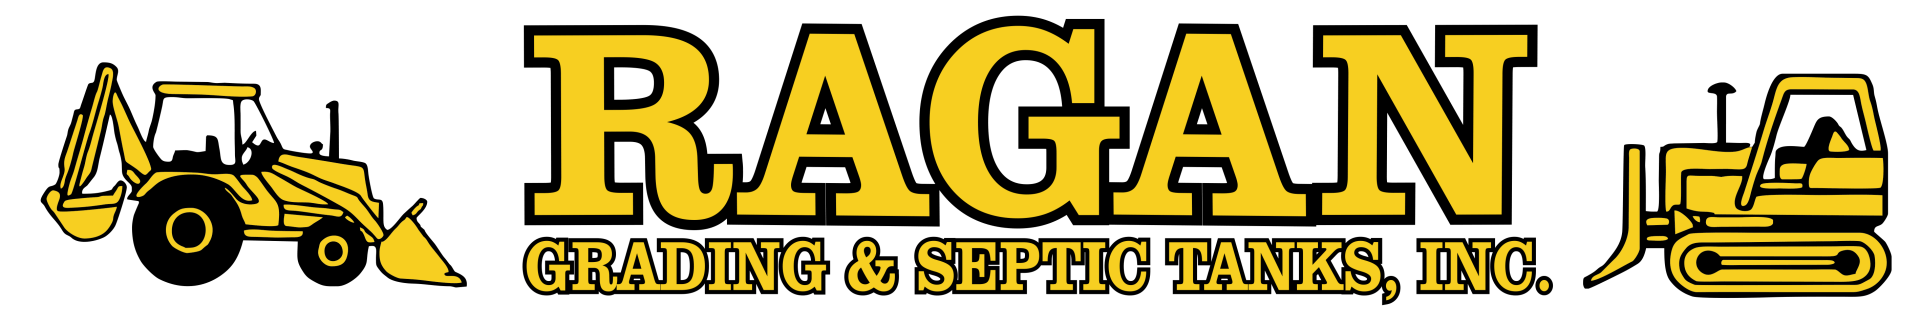 Ragan Grading & Septic Tanks, Inc.